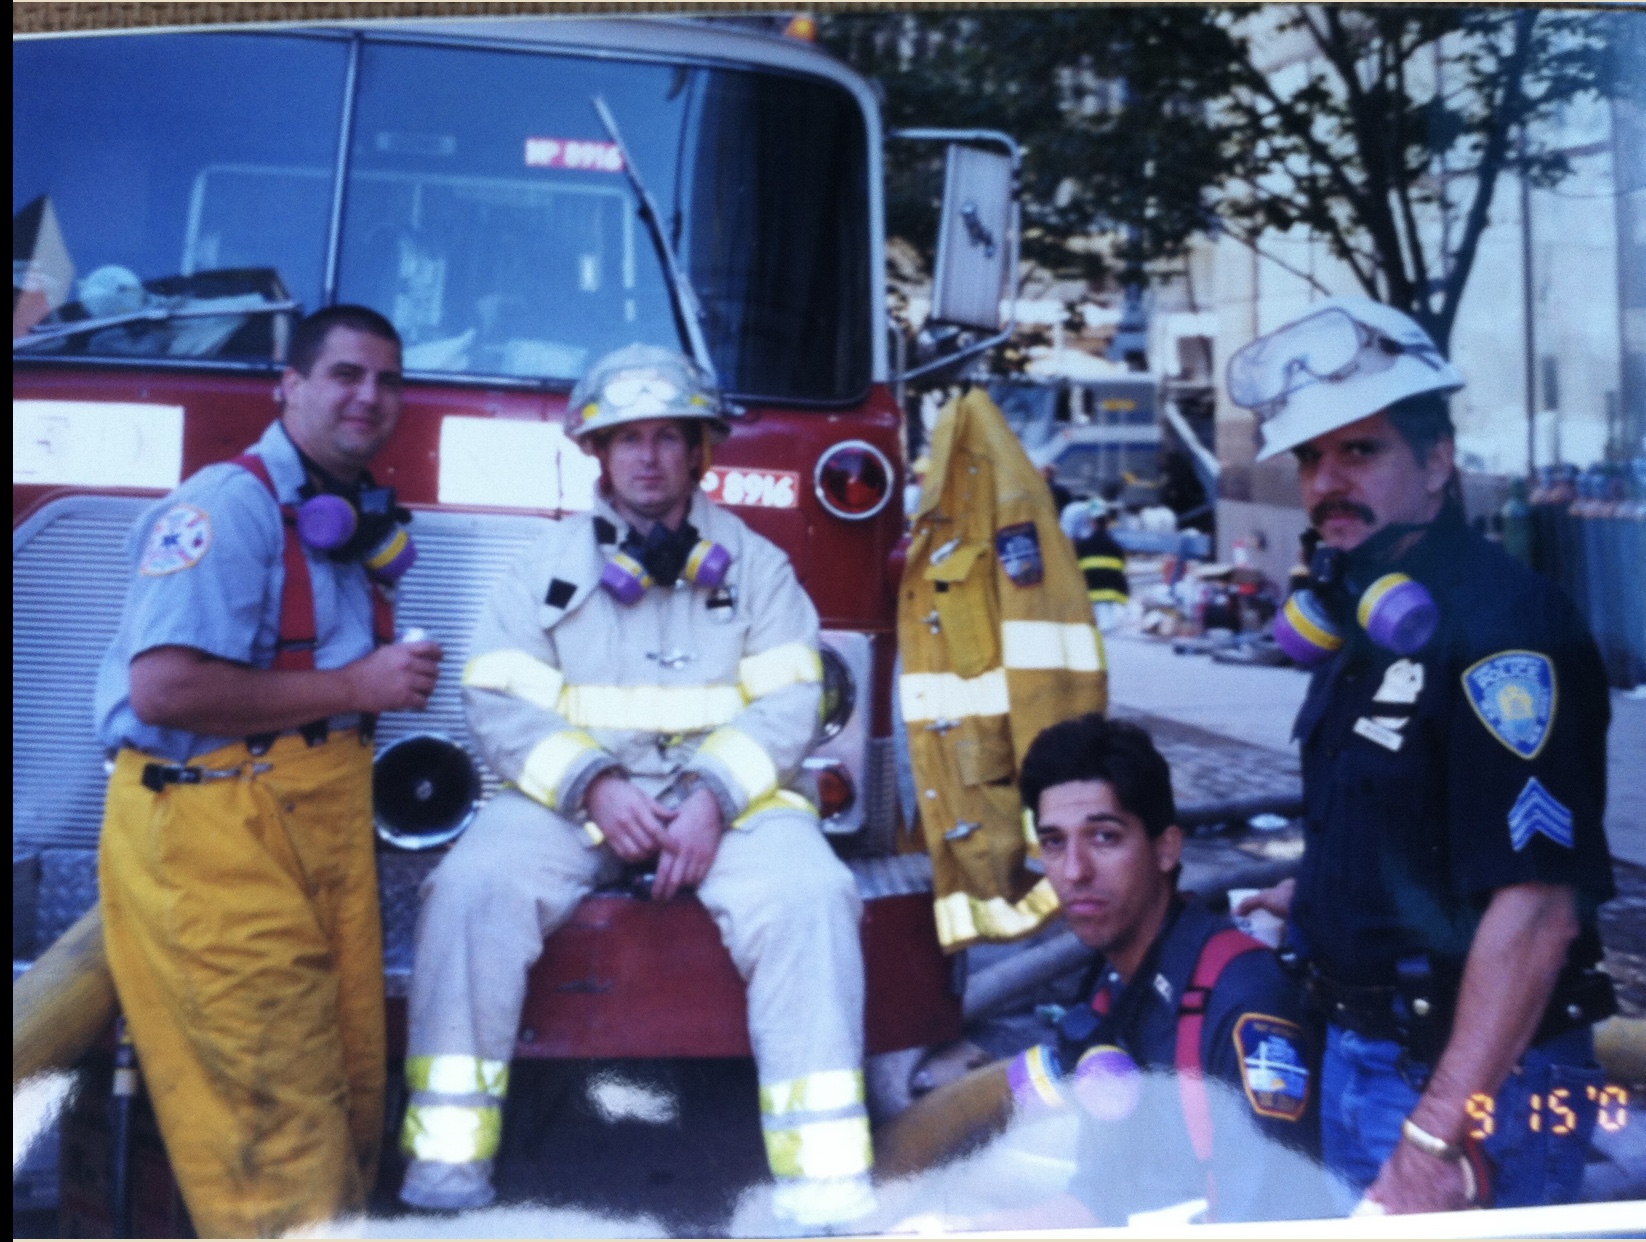 A first responder team sits together beside a fire truck